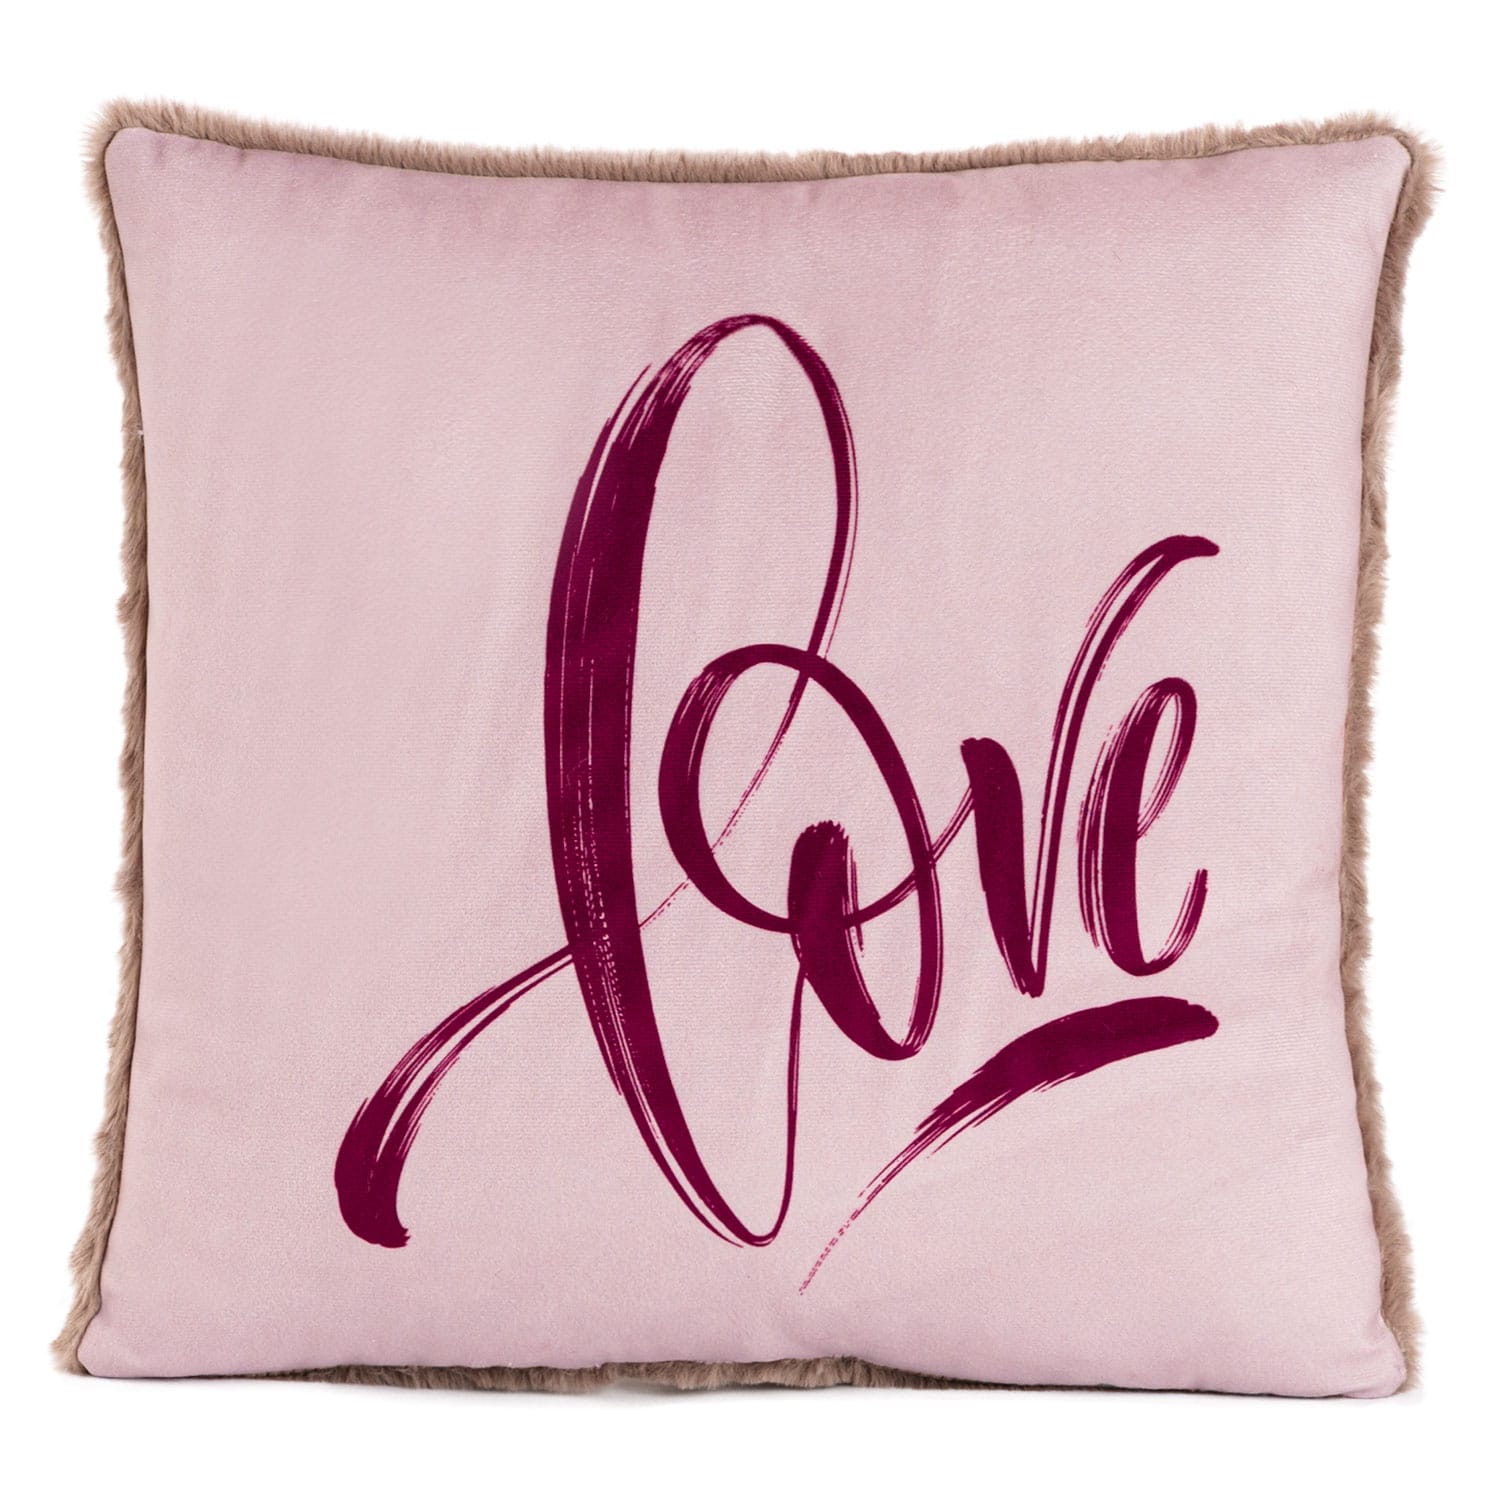 St. Valentine's pillow - 4